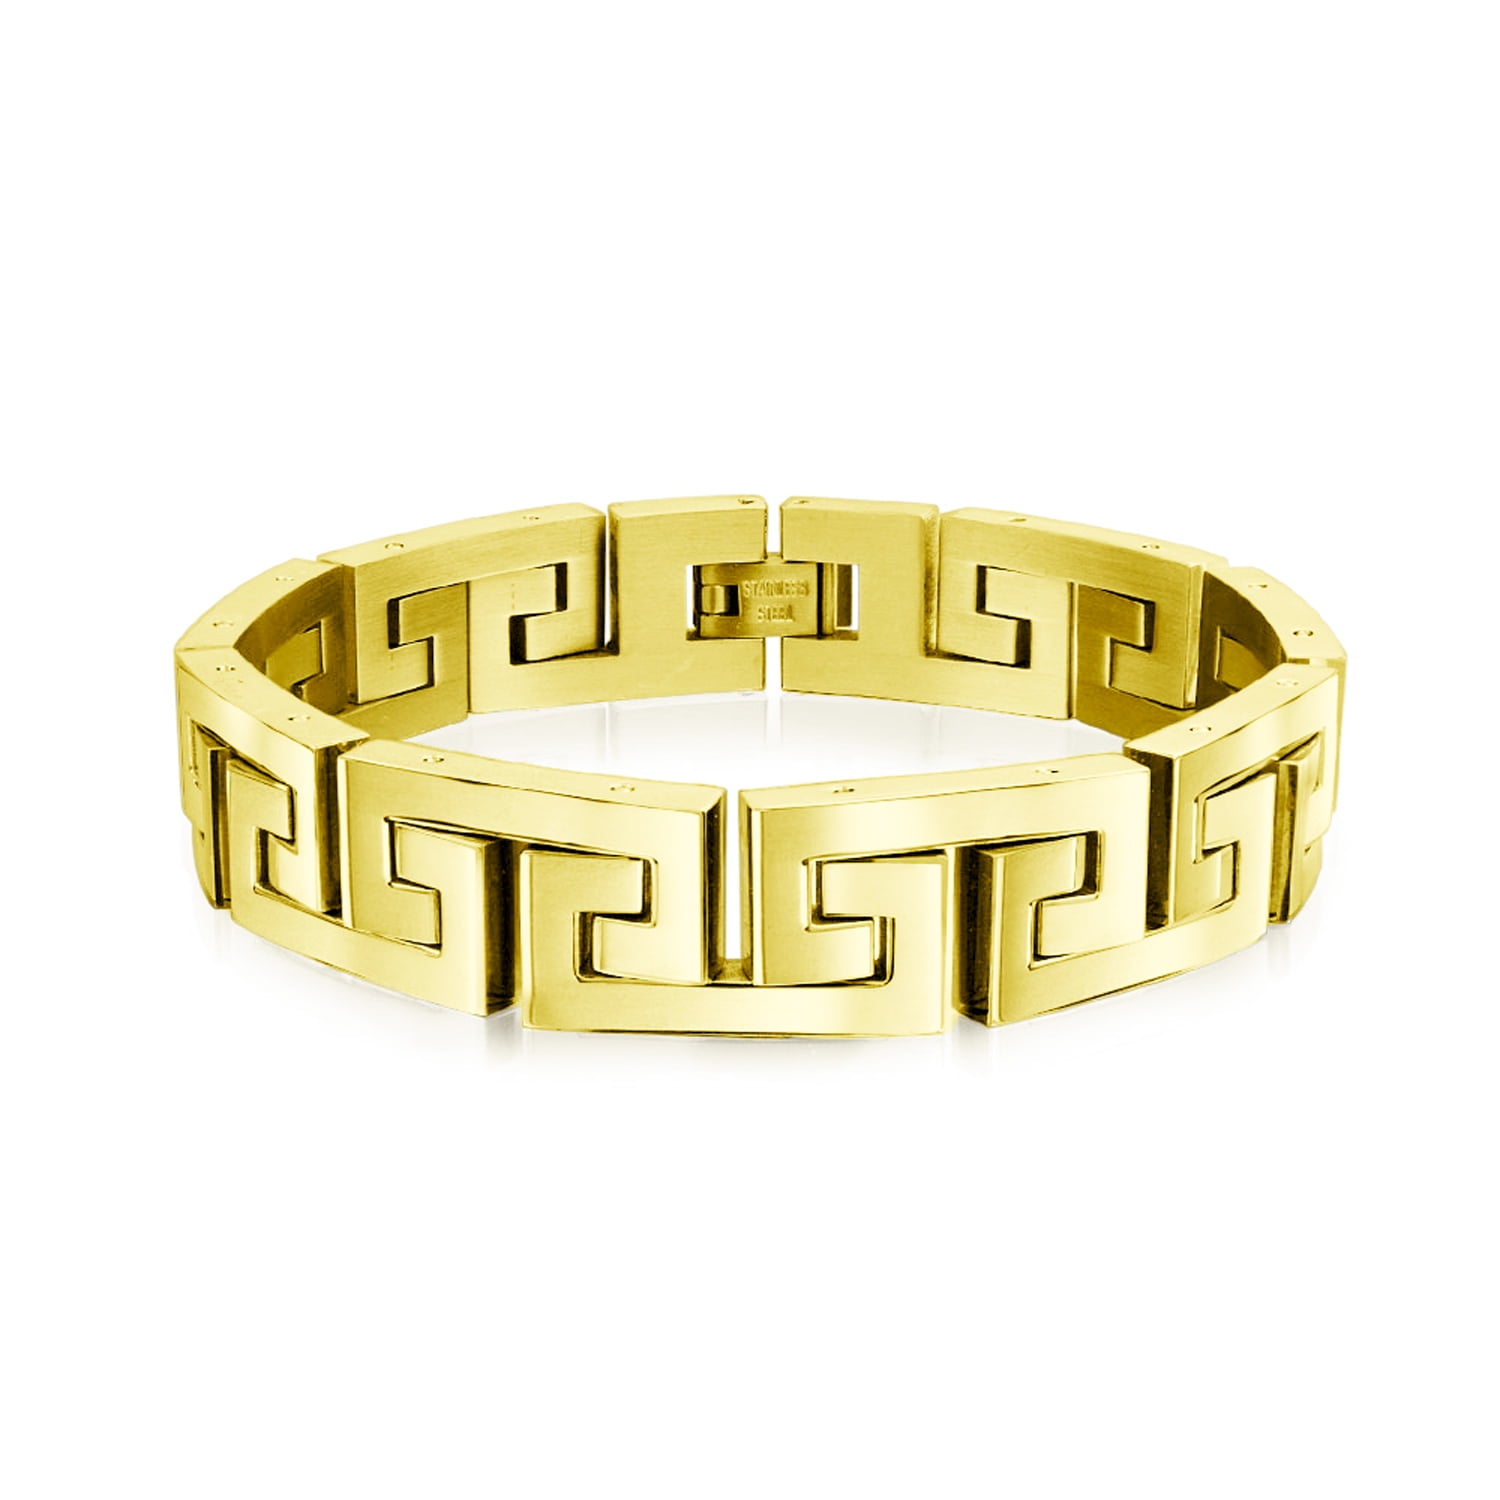 Bling Jewelry Strong Masculine Geometric Fancy Design Greek Key Pattern Symbol Link Bracelet for Teens Men Black Gold Silver Tone Stainless Steel Wristband 8.5 9 Inch 12MM